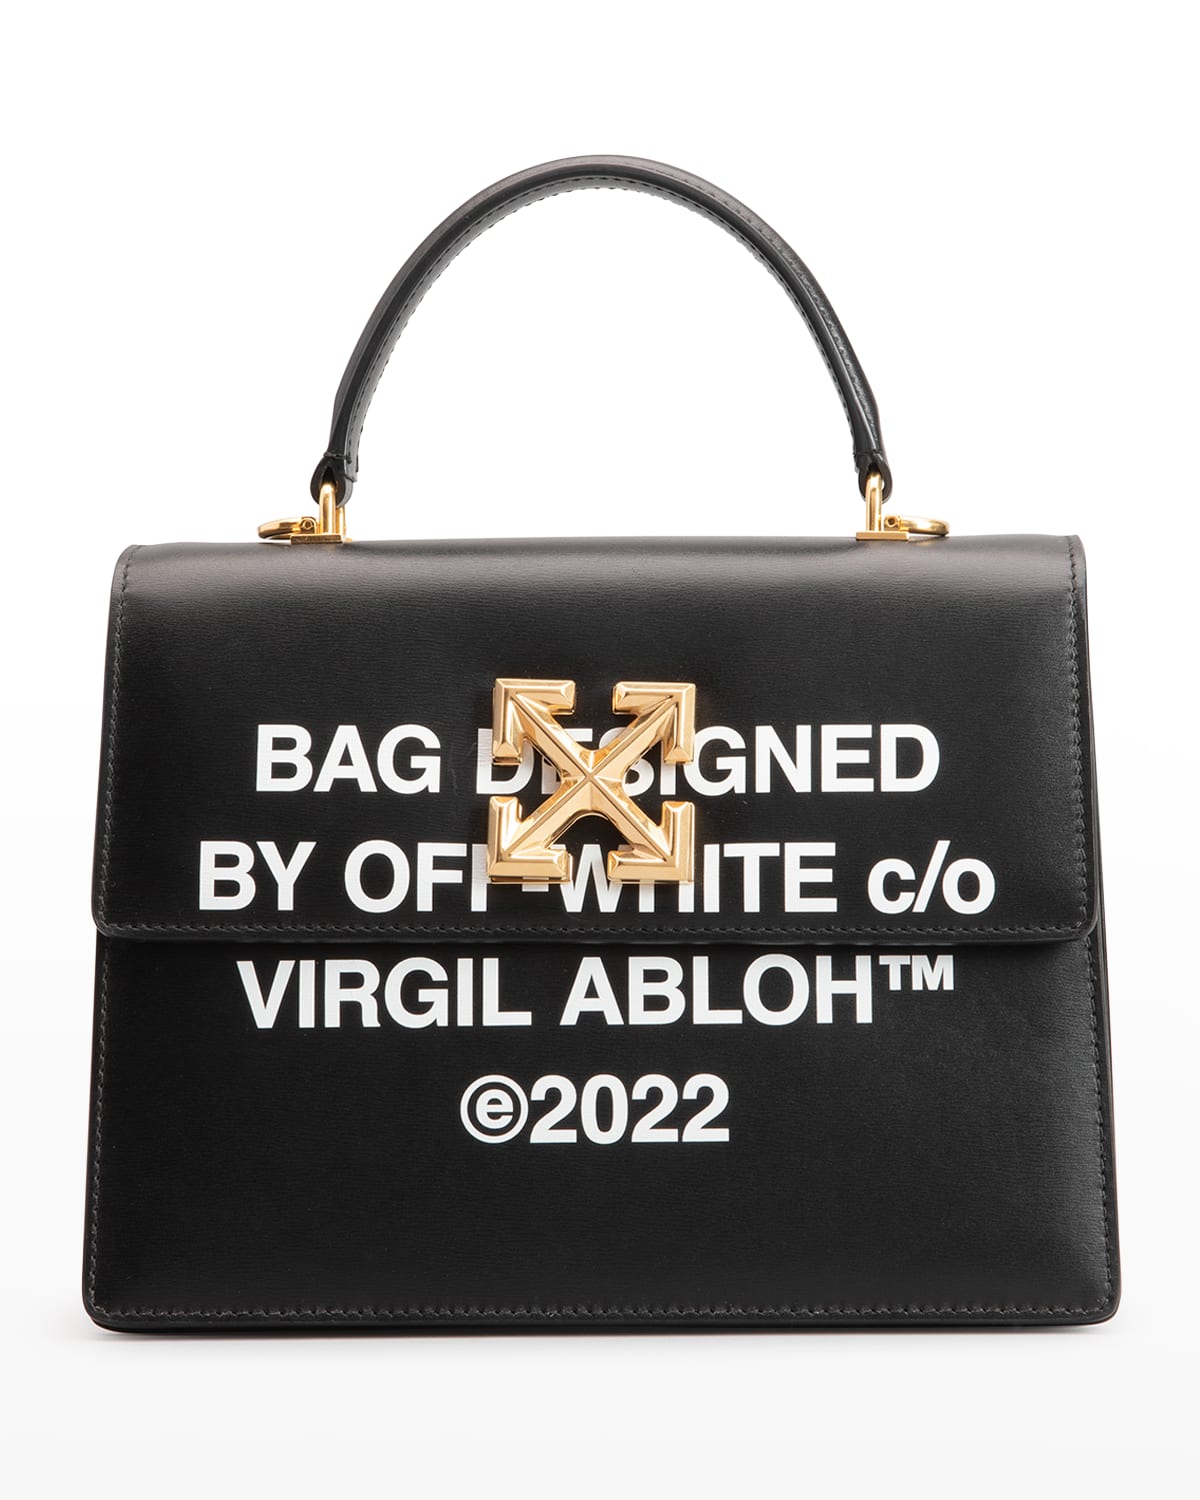 Off-White c/o Virgil Abloh Cut Here Jitney 2.8 Bag in Black